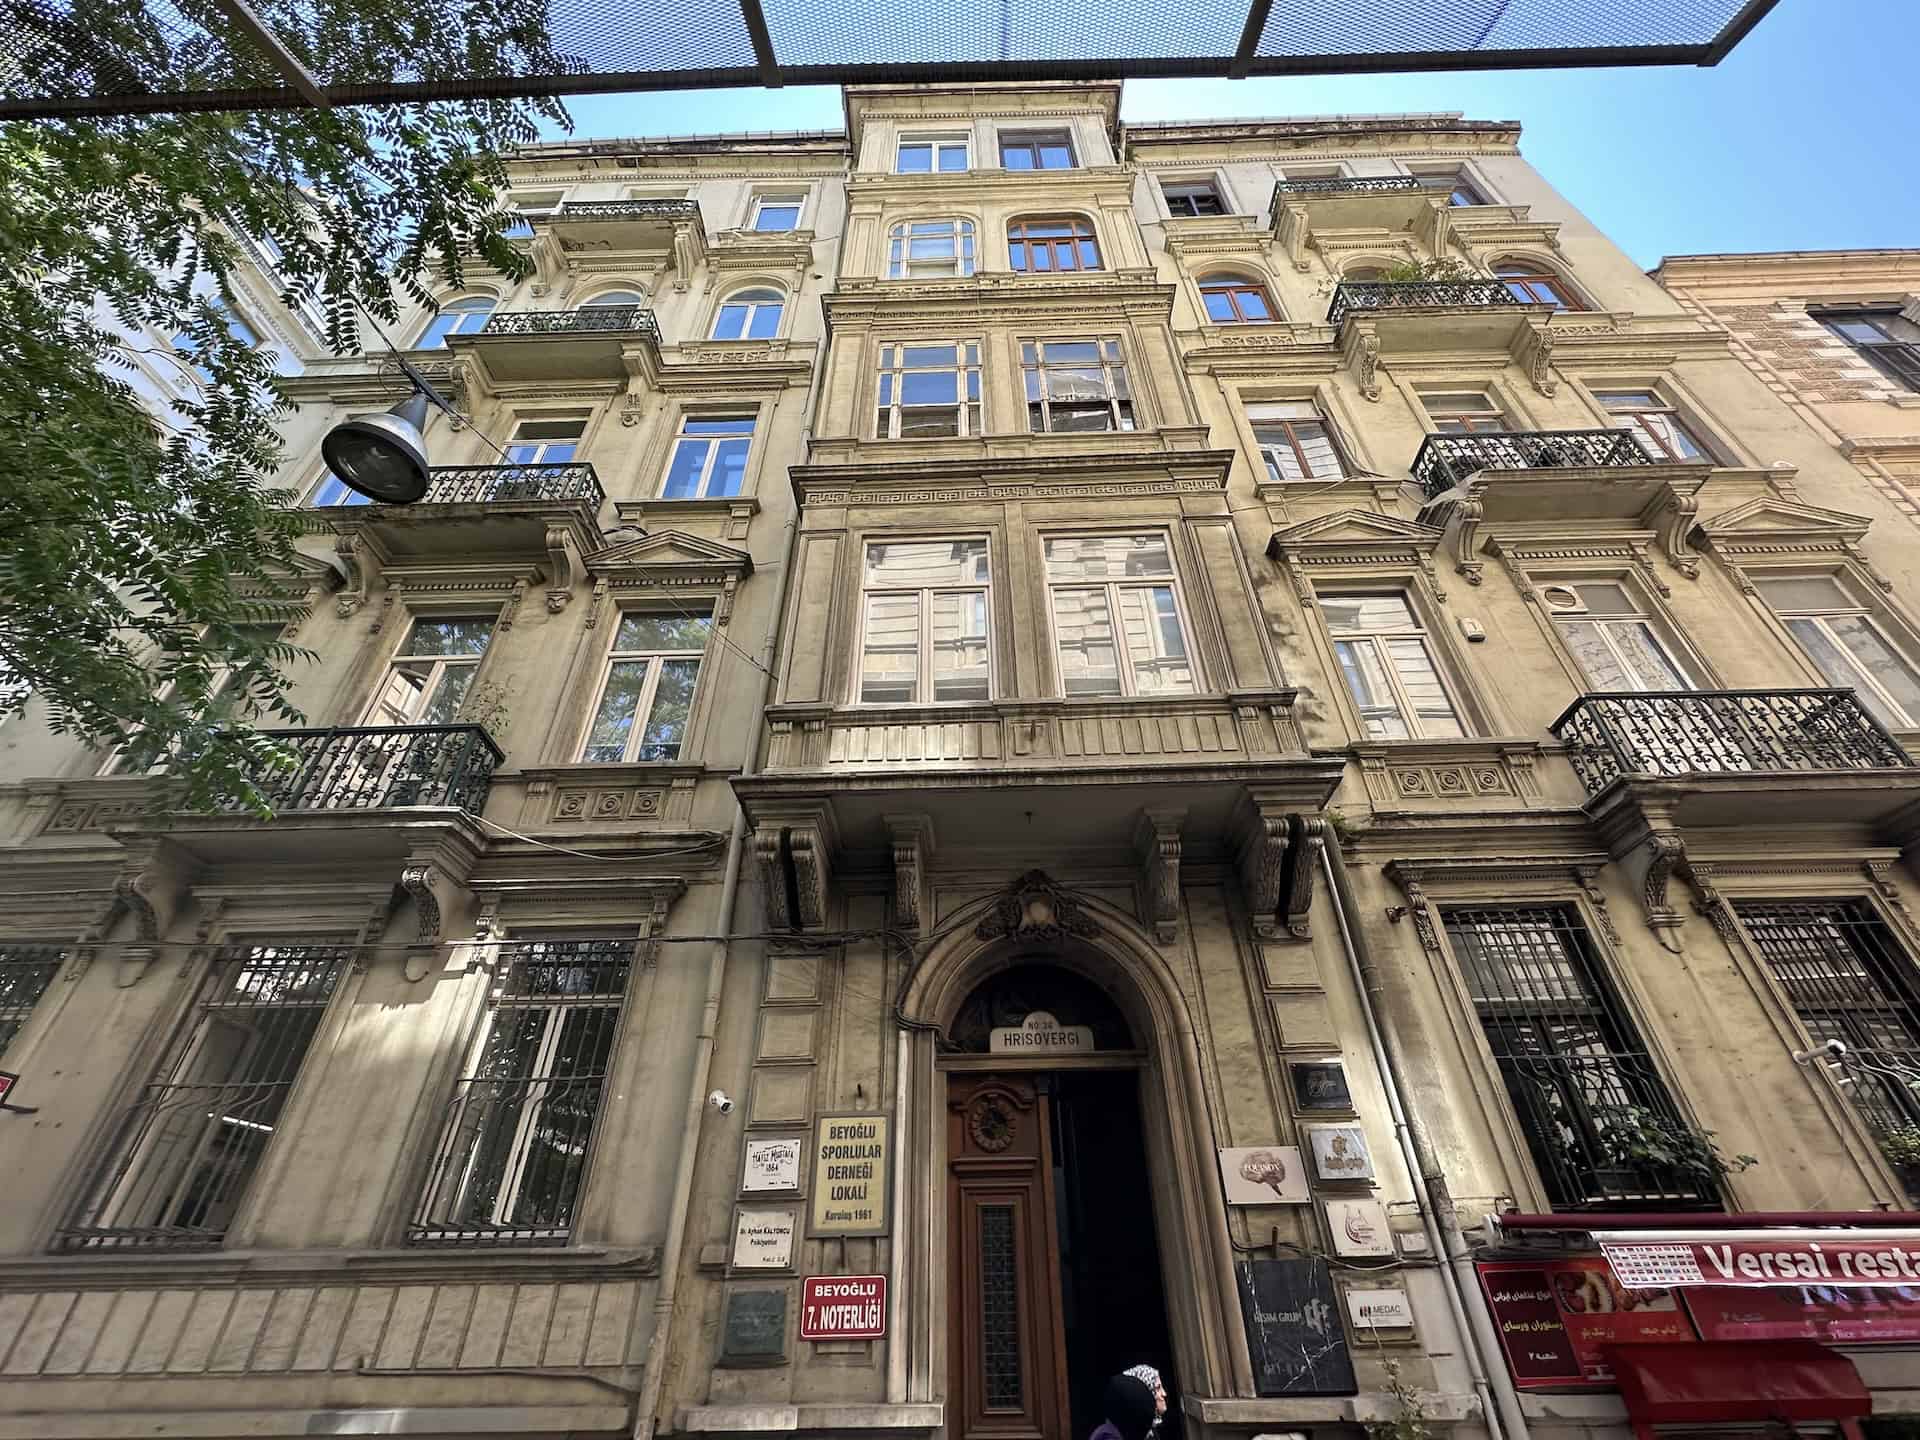 Hrisovergi Apartment in Taksim, Istanbul, Turkey